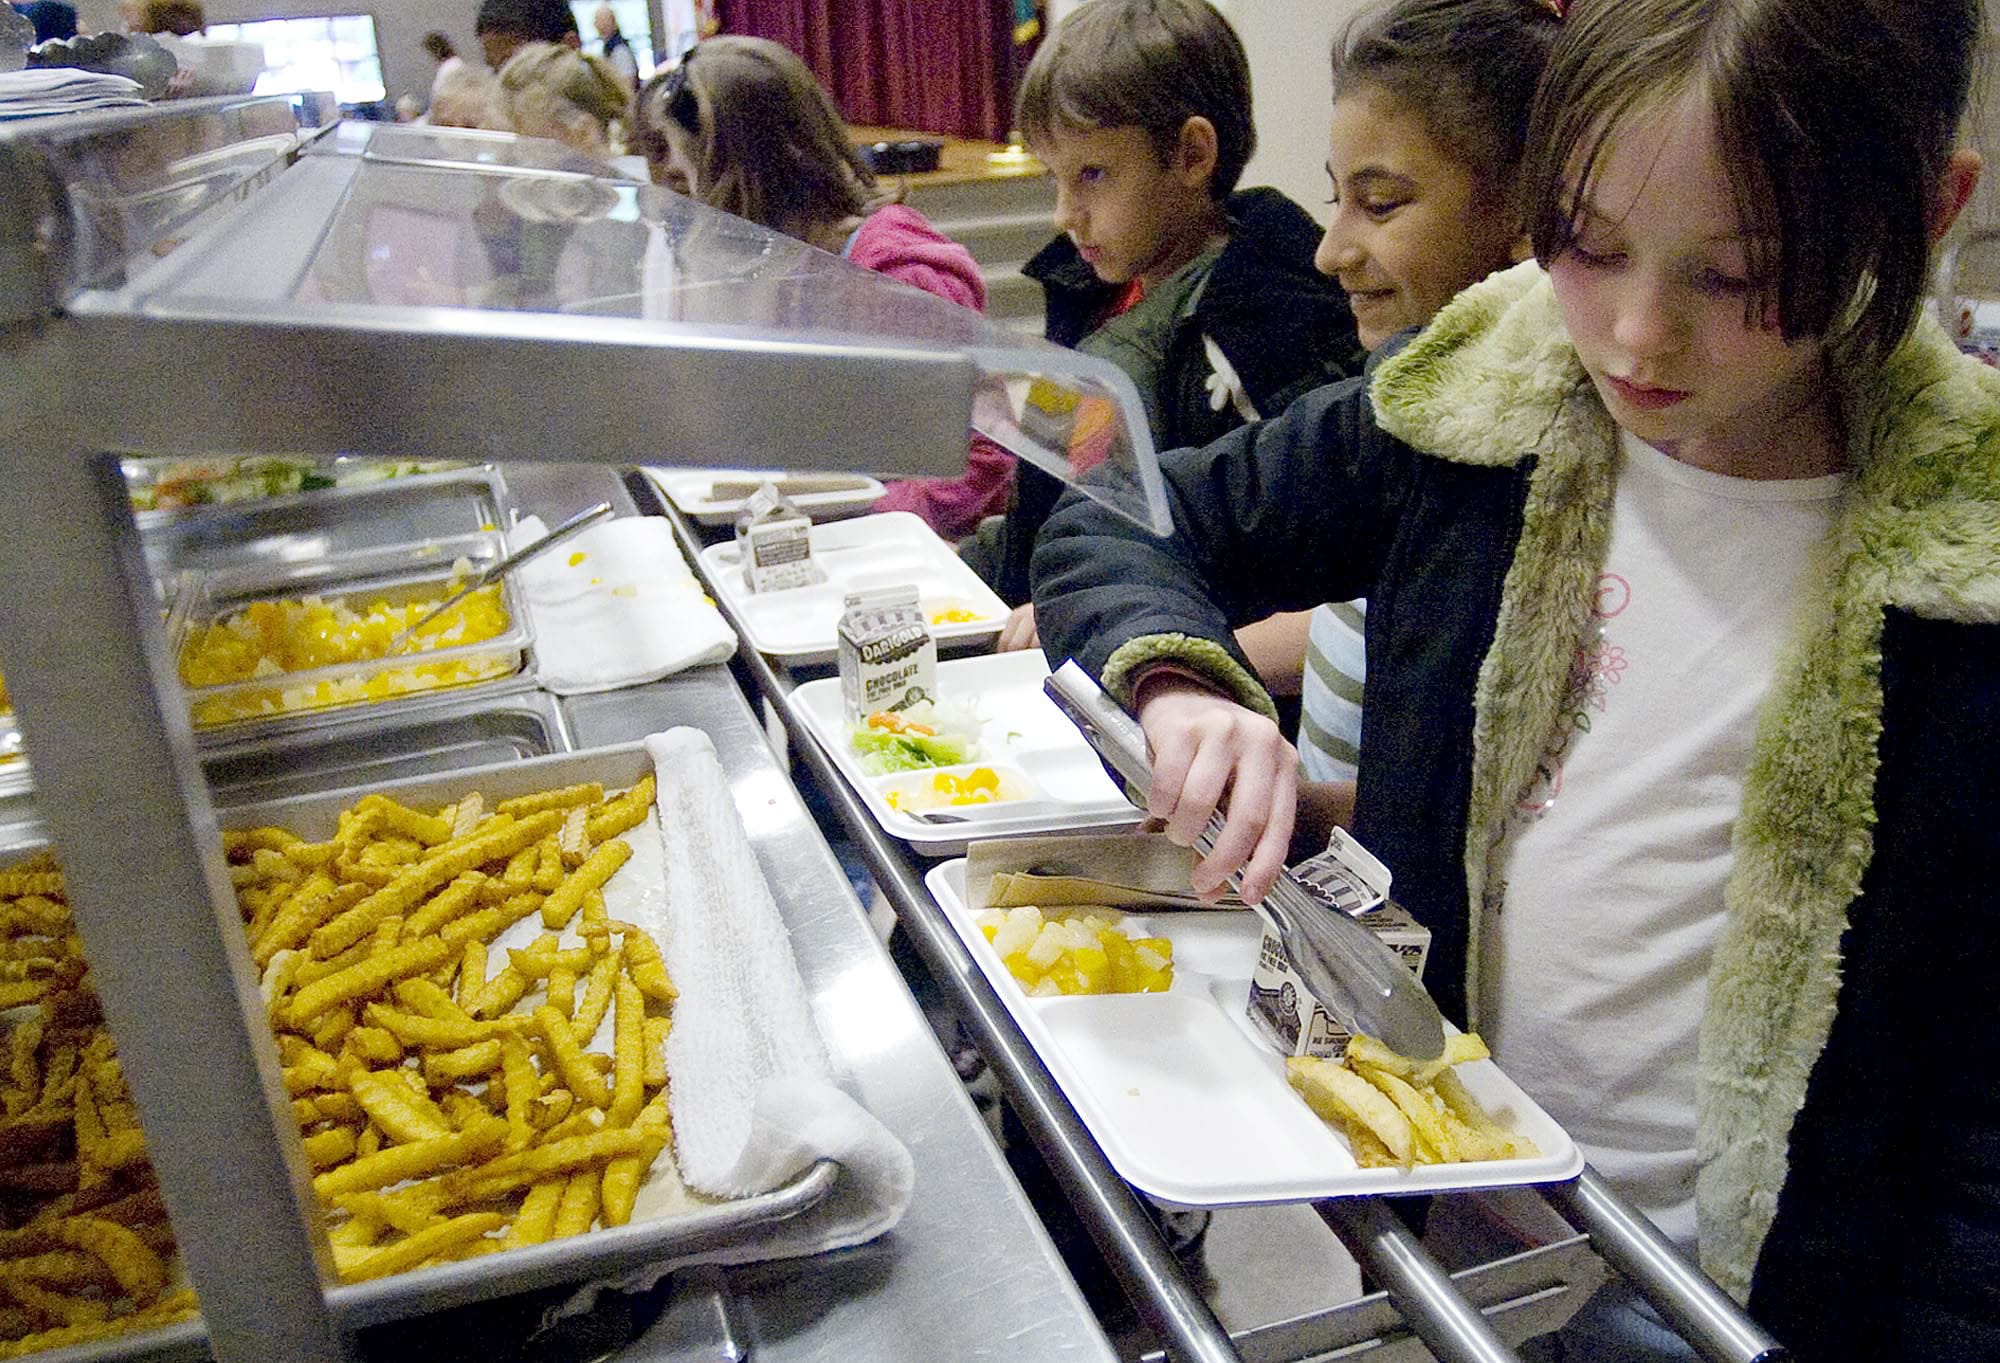 School cafeterias prepare for tough test - The Columbian